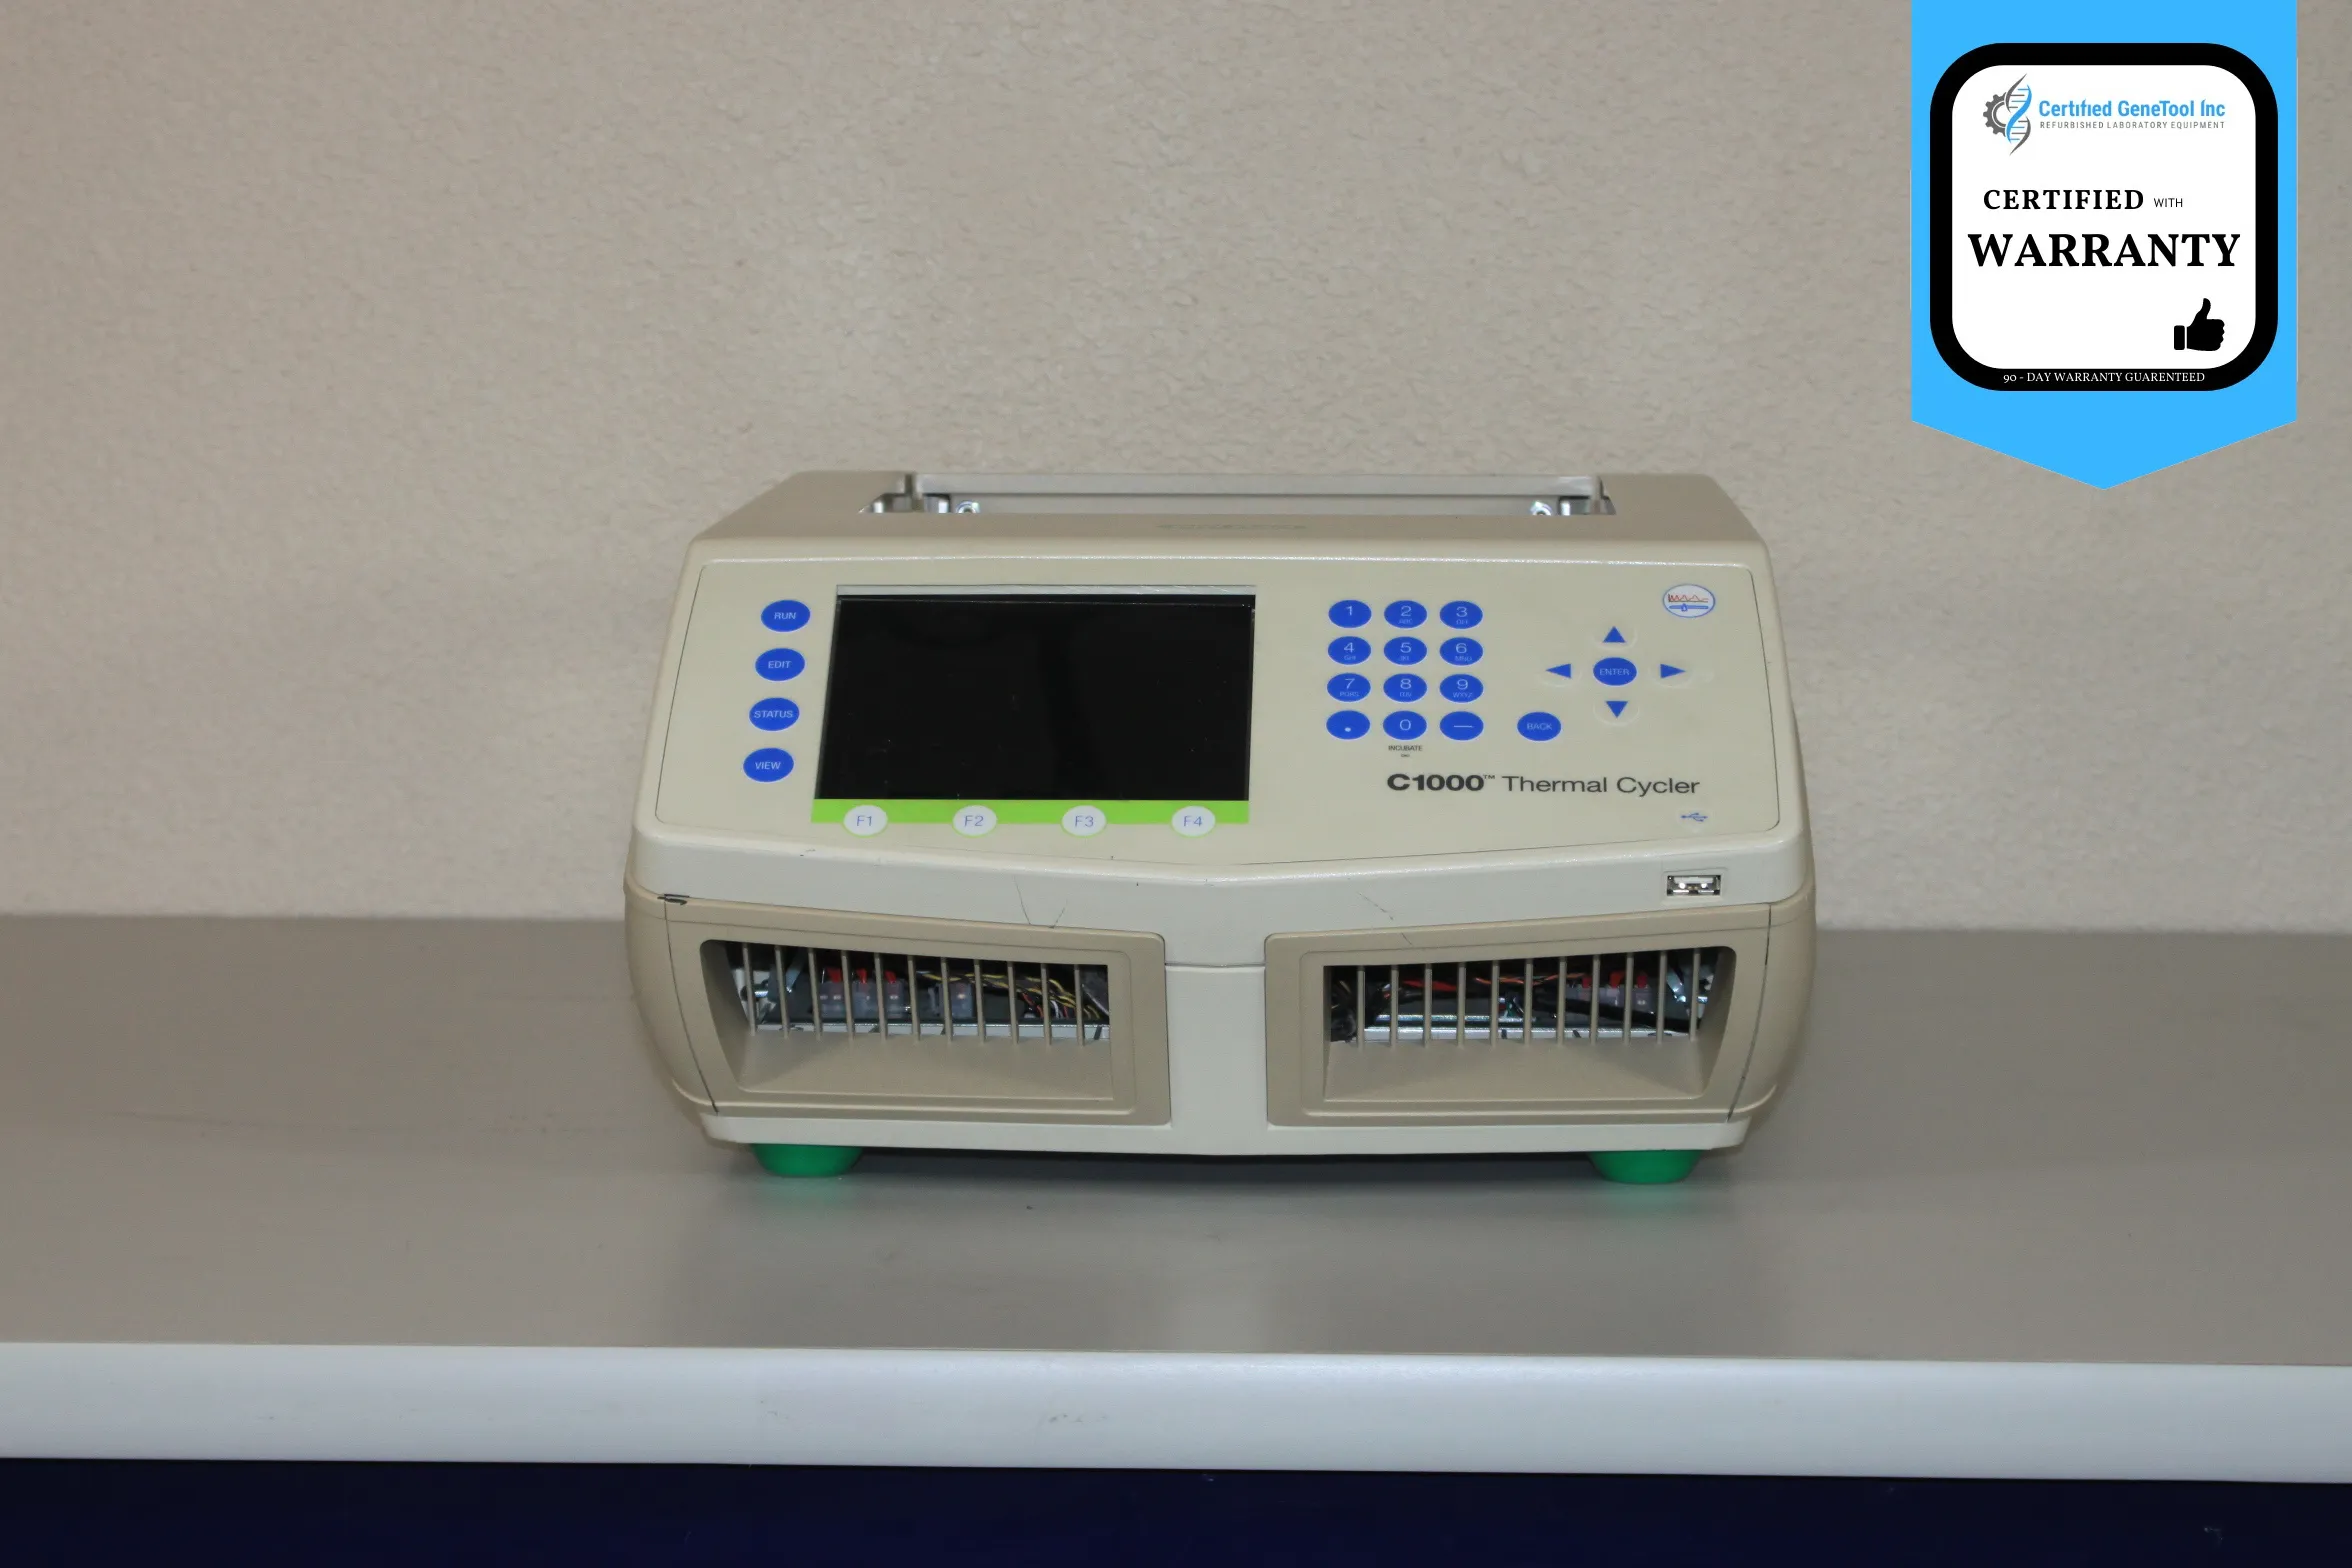 Bio-Rad C-1000 PCR - Certified with Warranty